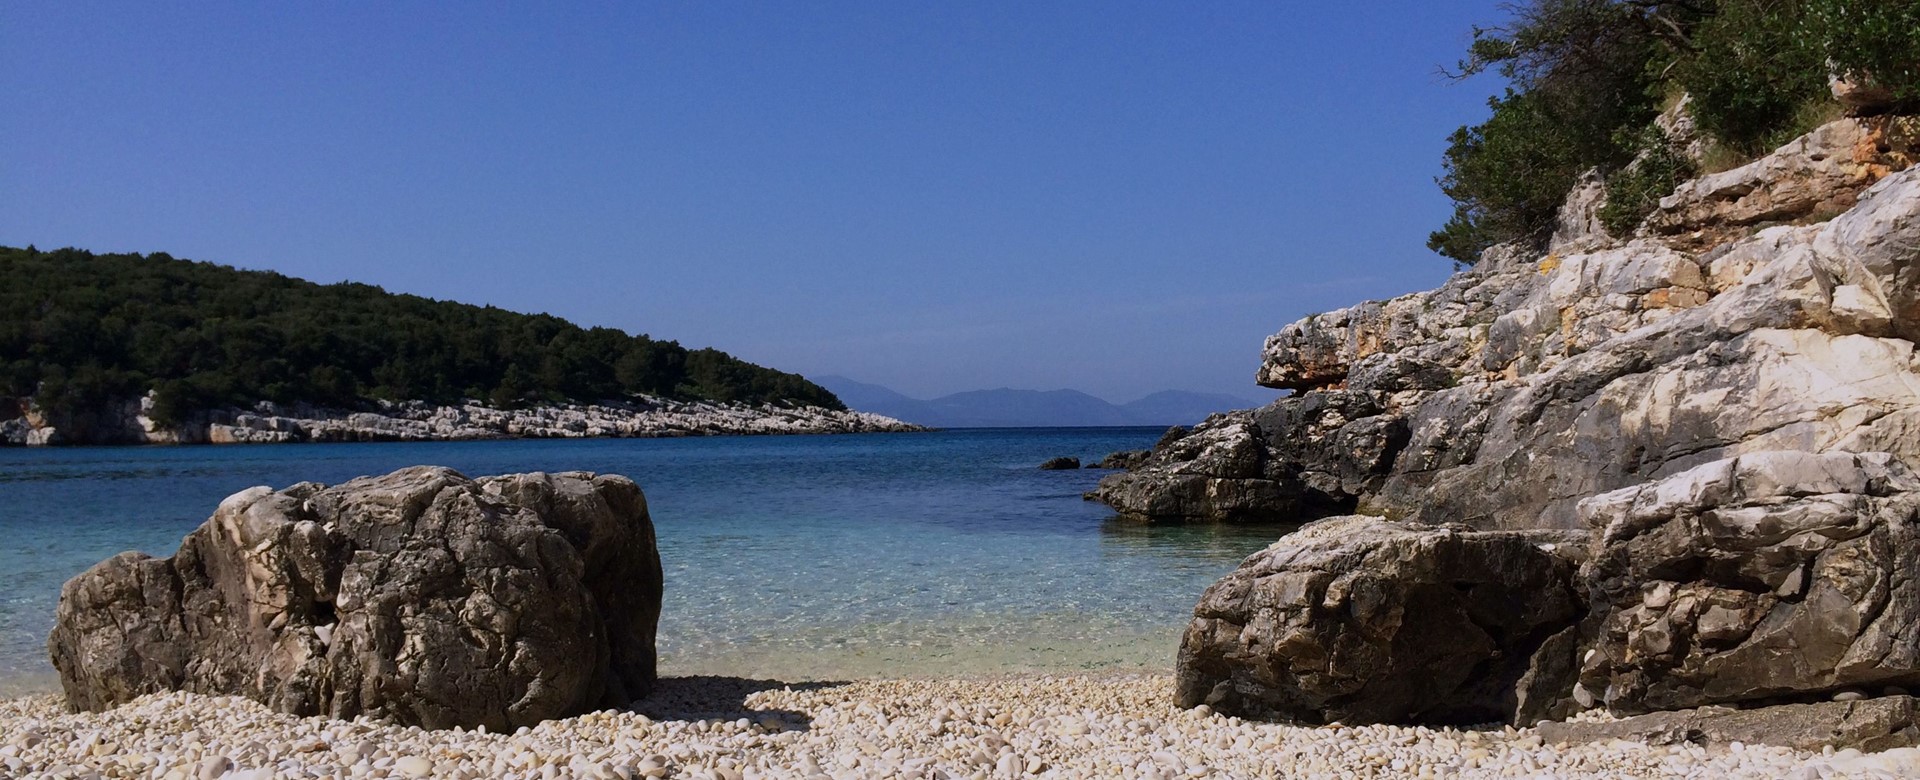 Kimilia beach near Fiscardo, Kefalonia, Greek Islands